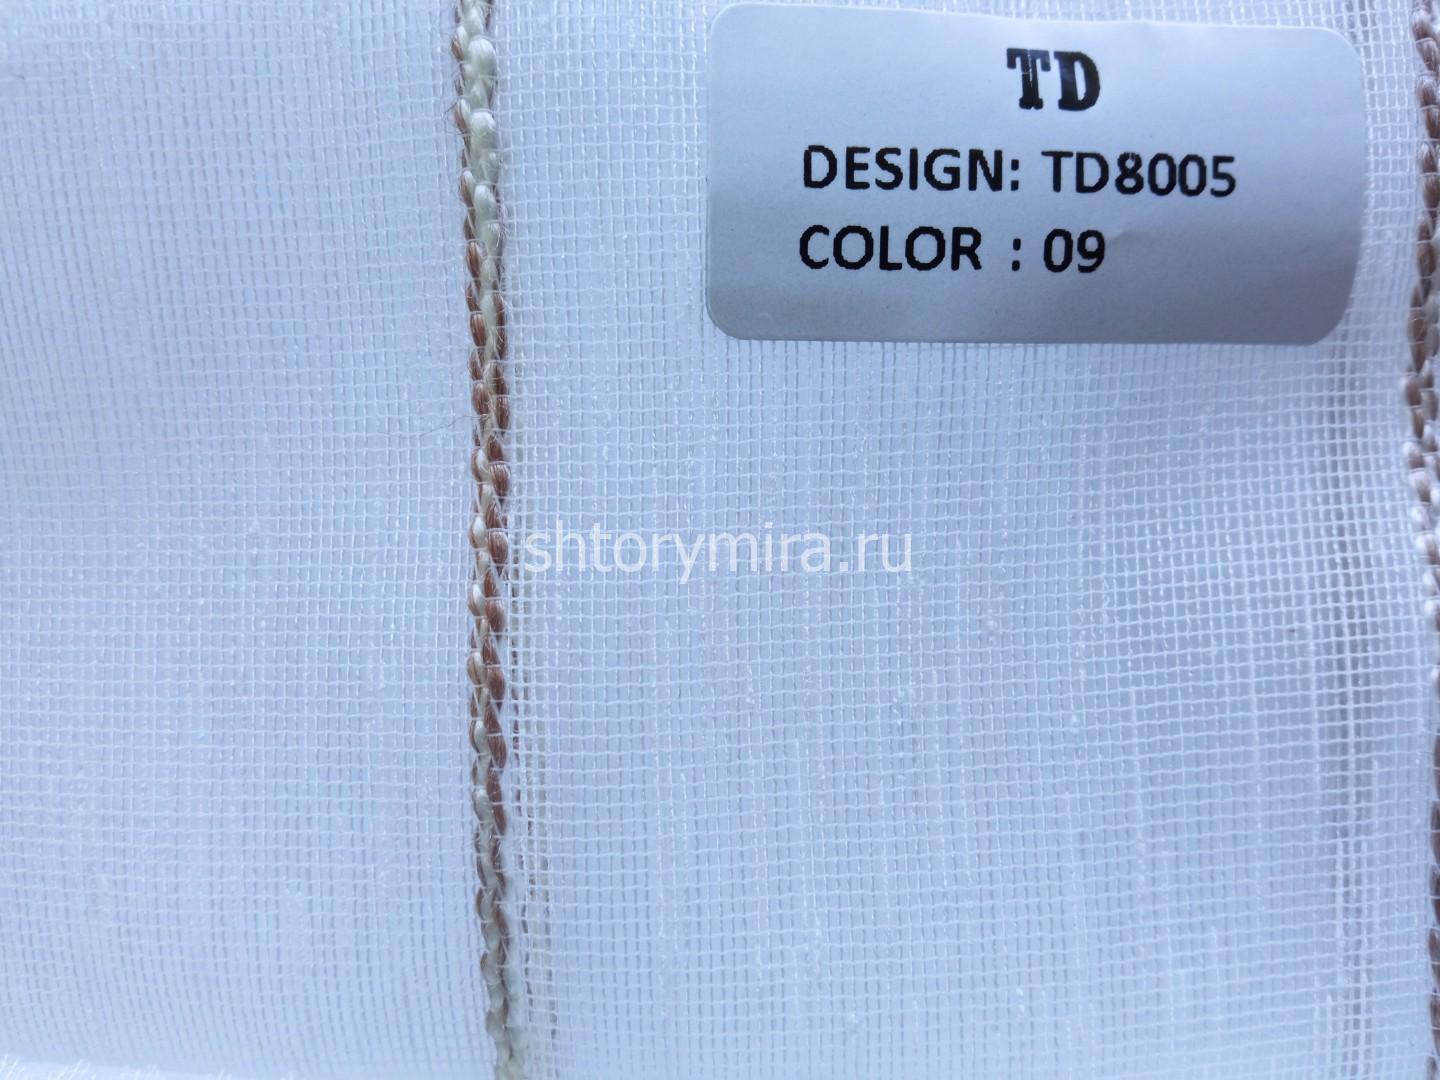 Ткань TD 8005-09 TD Collection